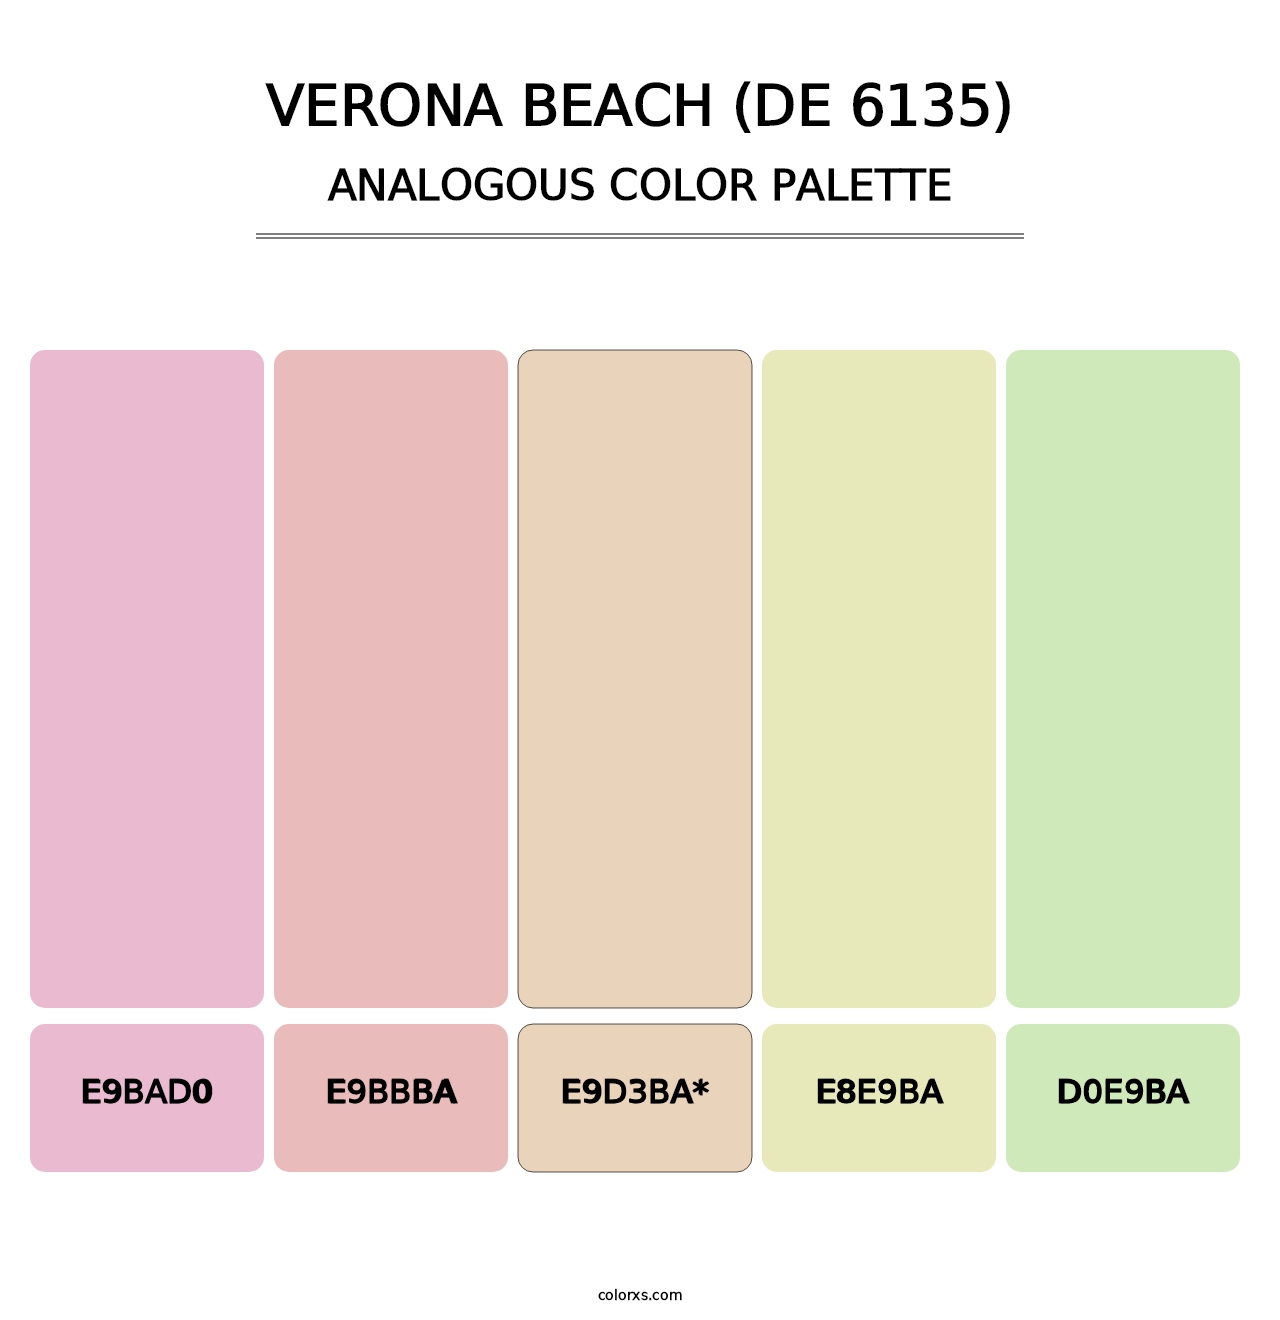 Verona Beach (DE 6135) - Analogous Color Palette